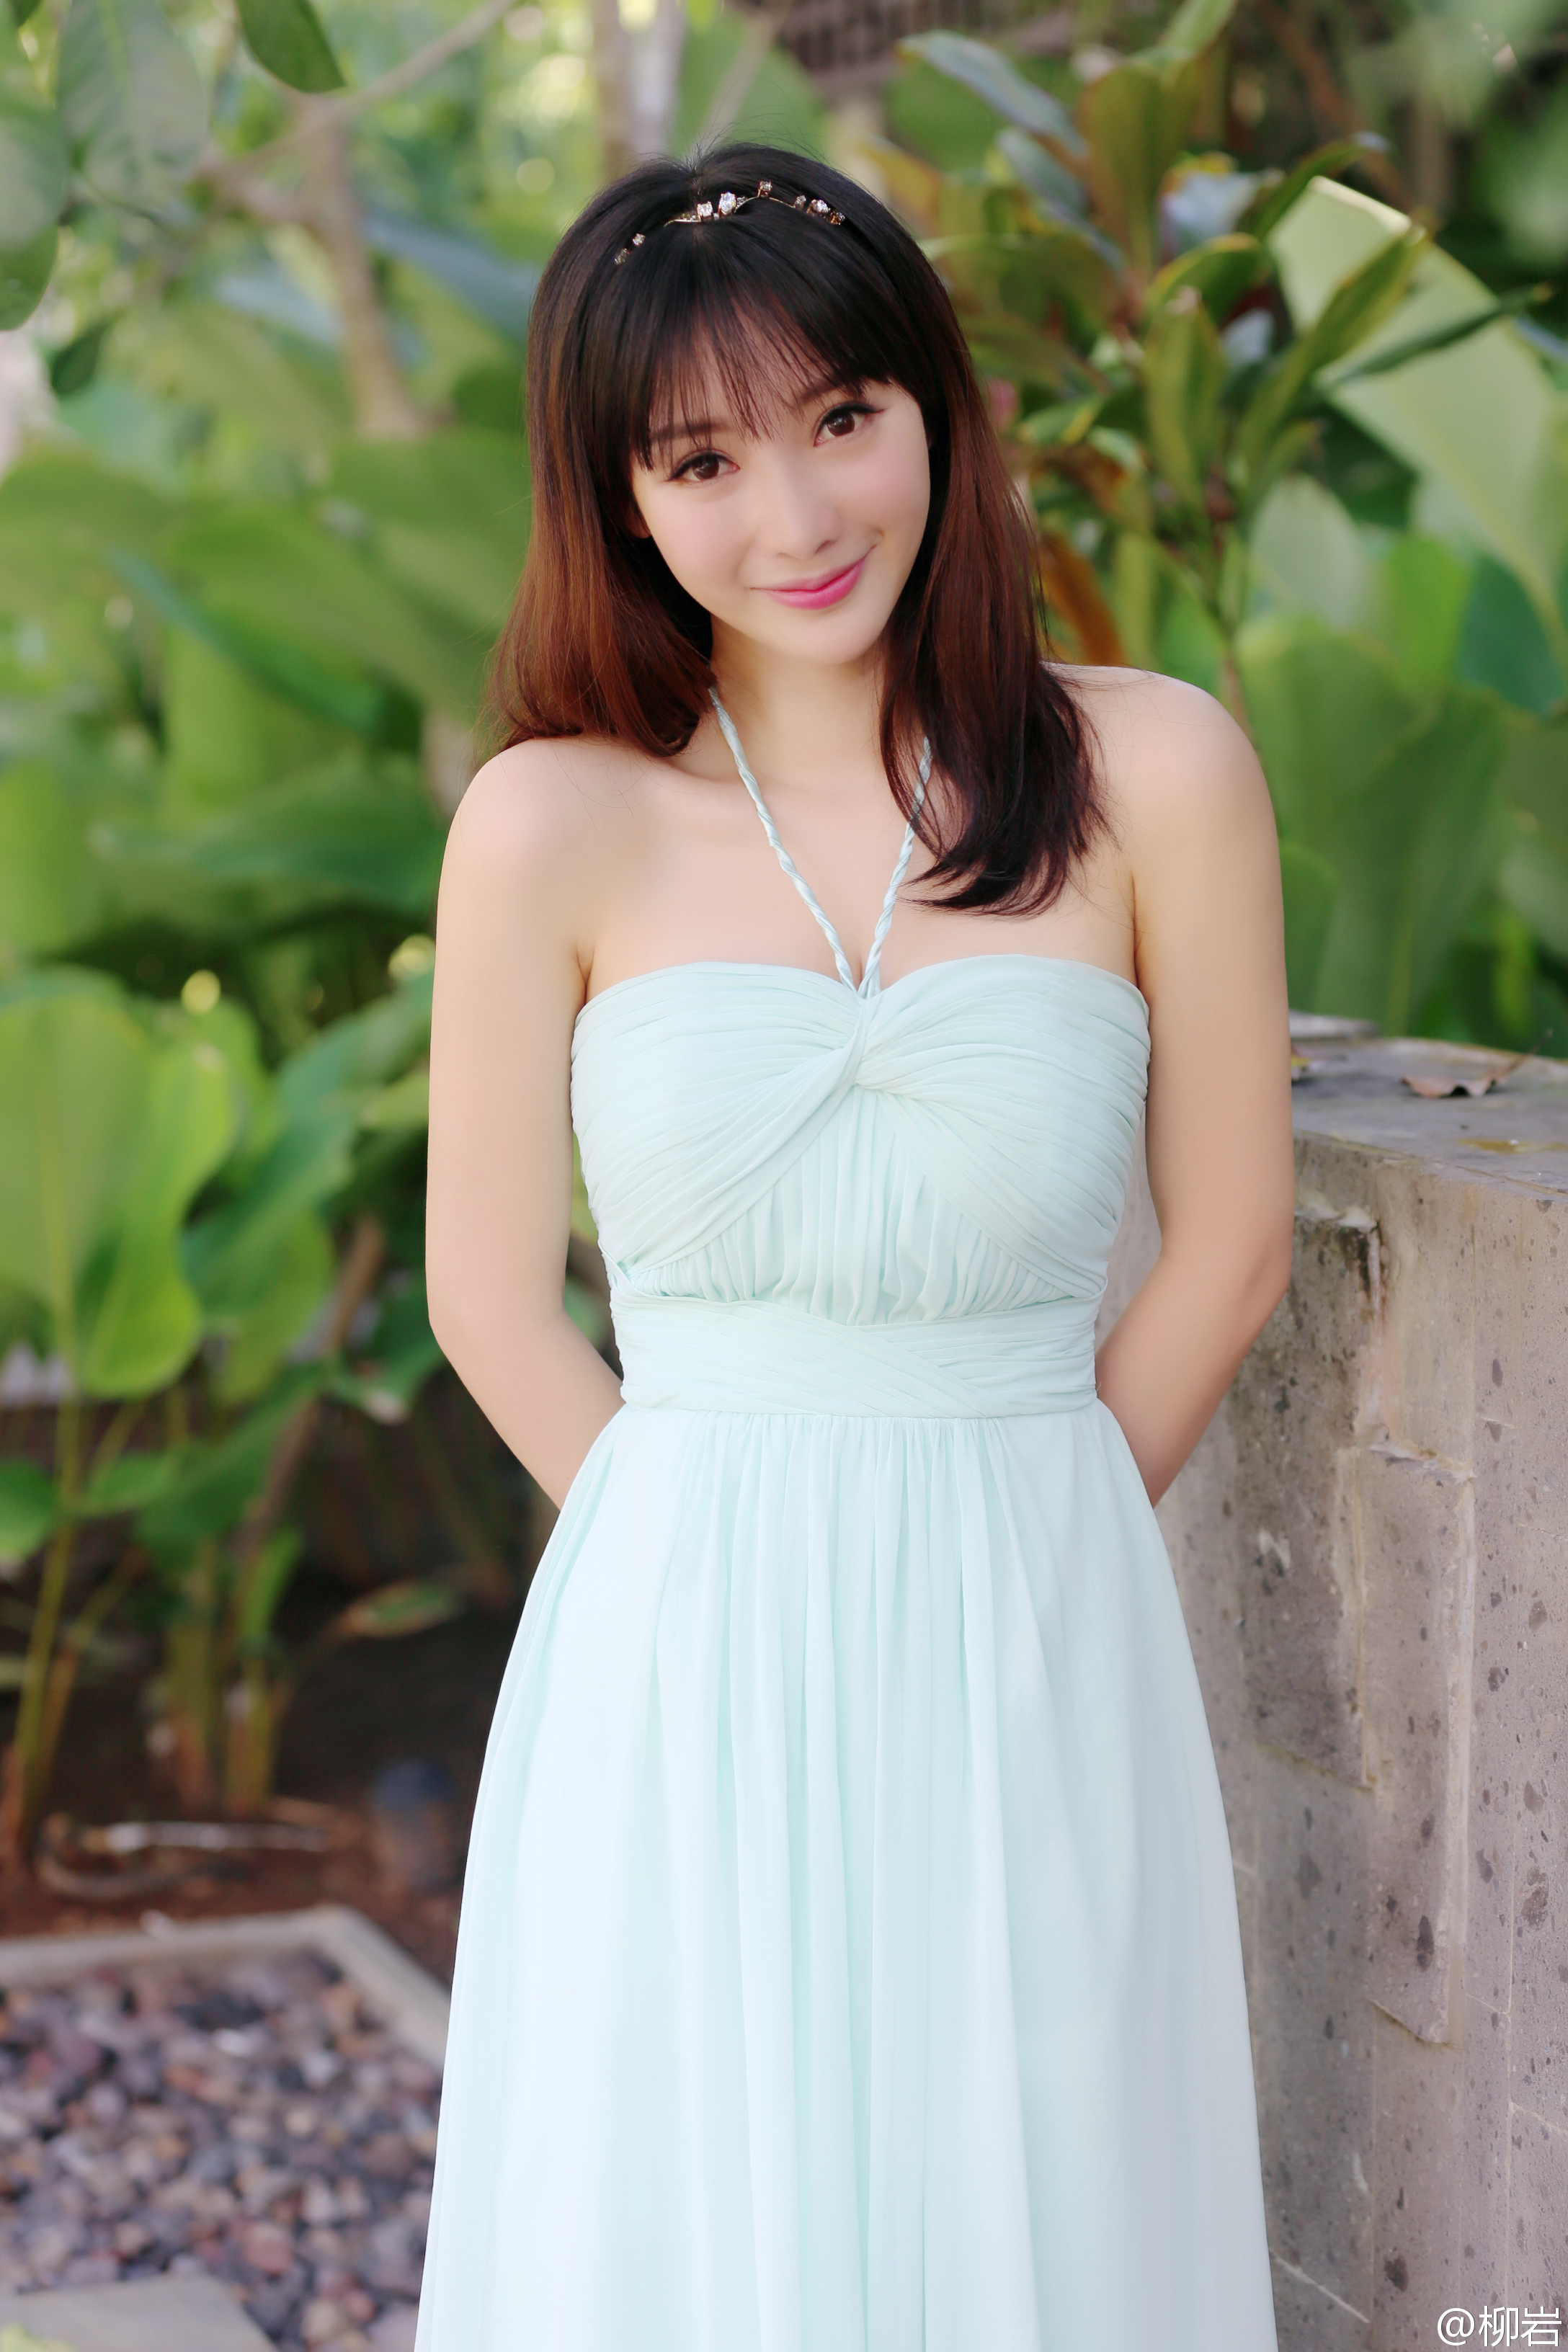 Liuyan Blue Dress Looking At Viewer Sunlight Outdoors Chinese Smiling 2176x3264